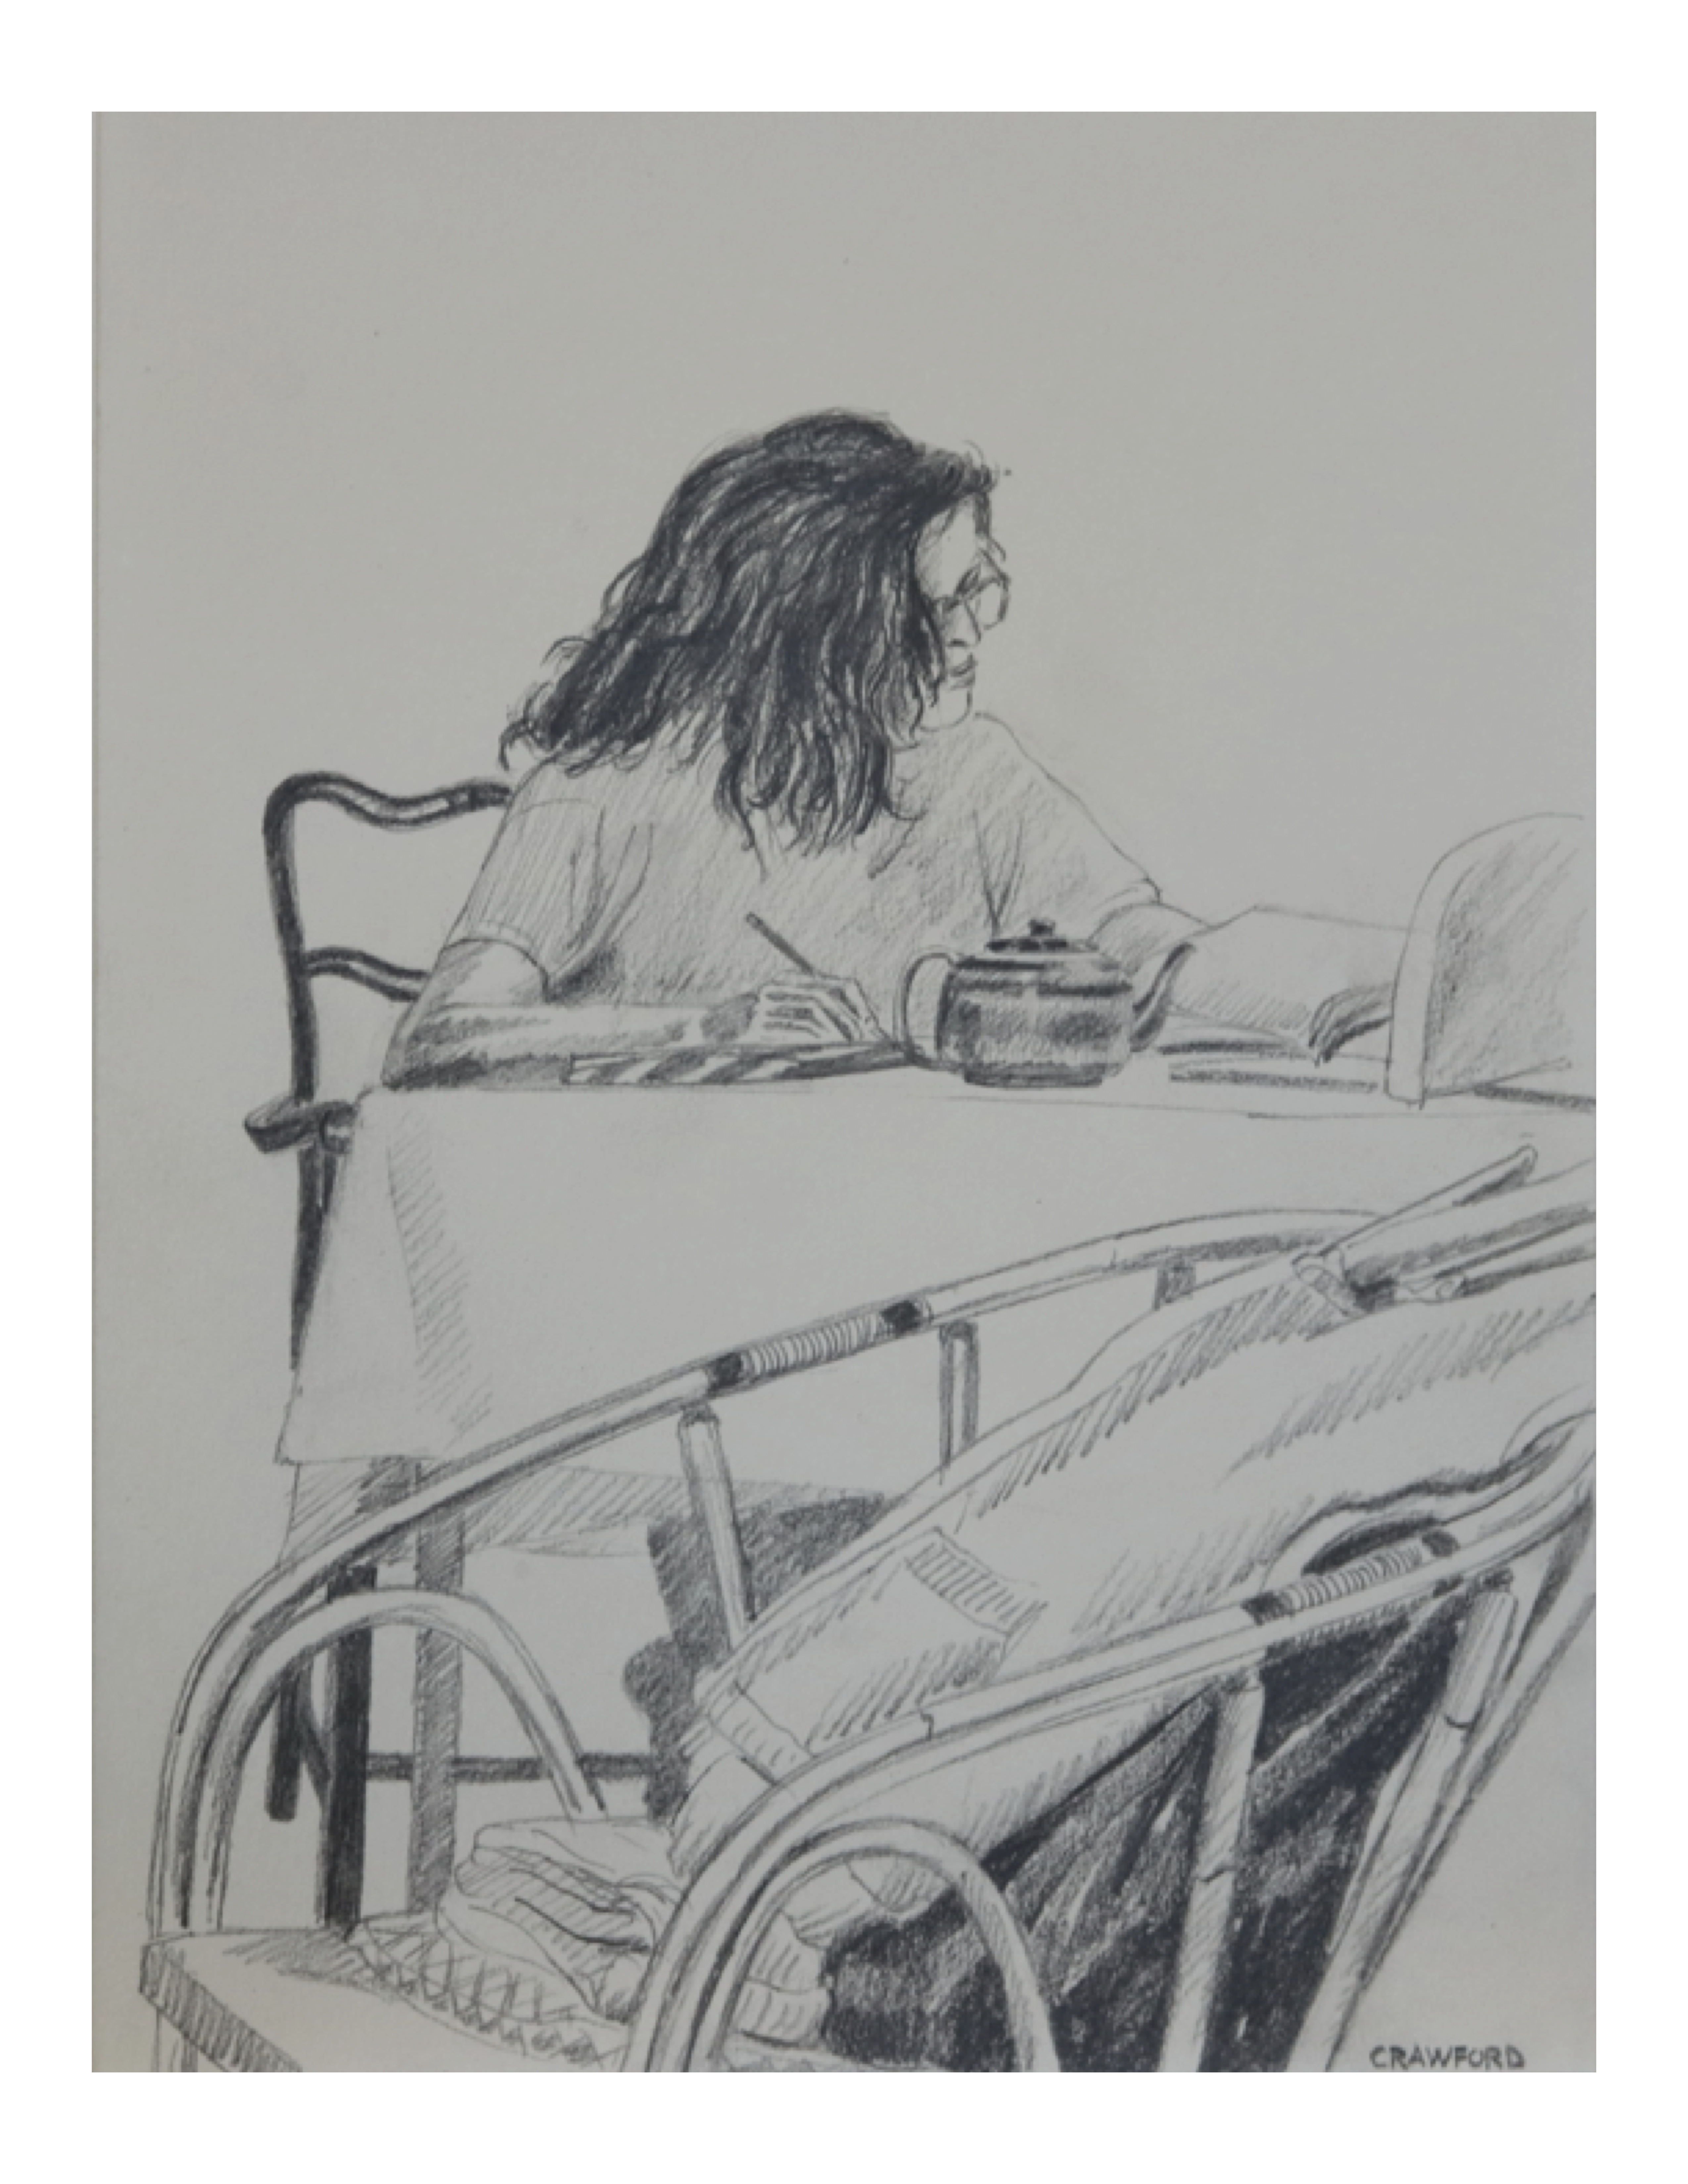 Zahida studying, Oct 23, 1988, pencil on paper, 22.8 cm x30.5 cm